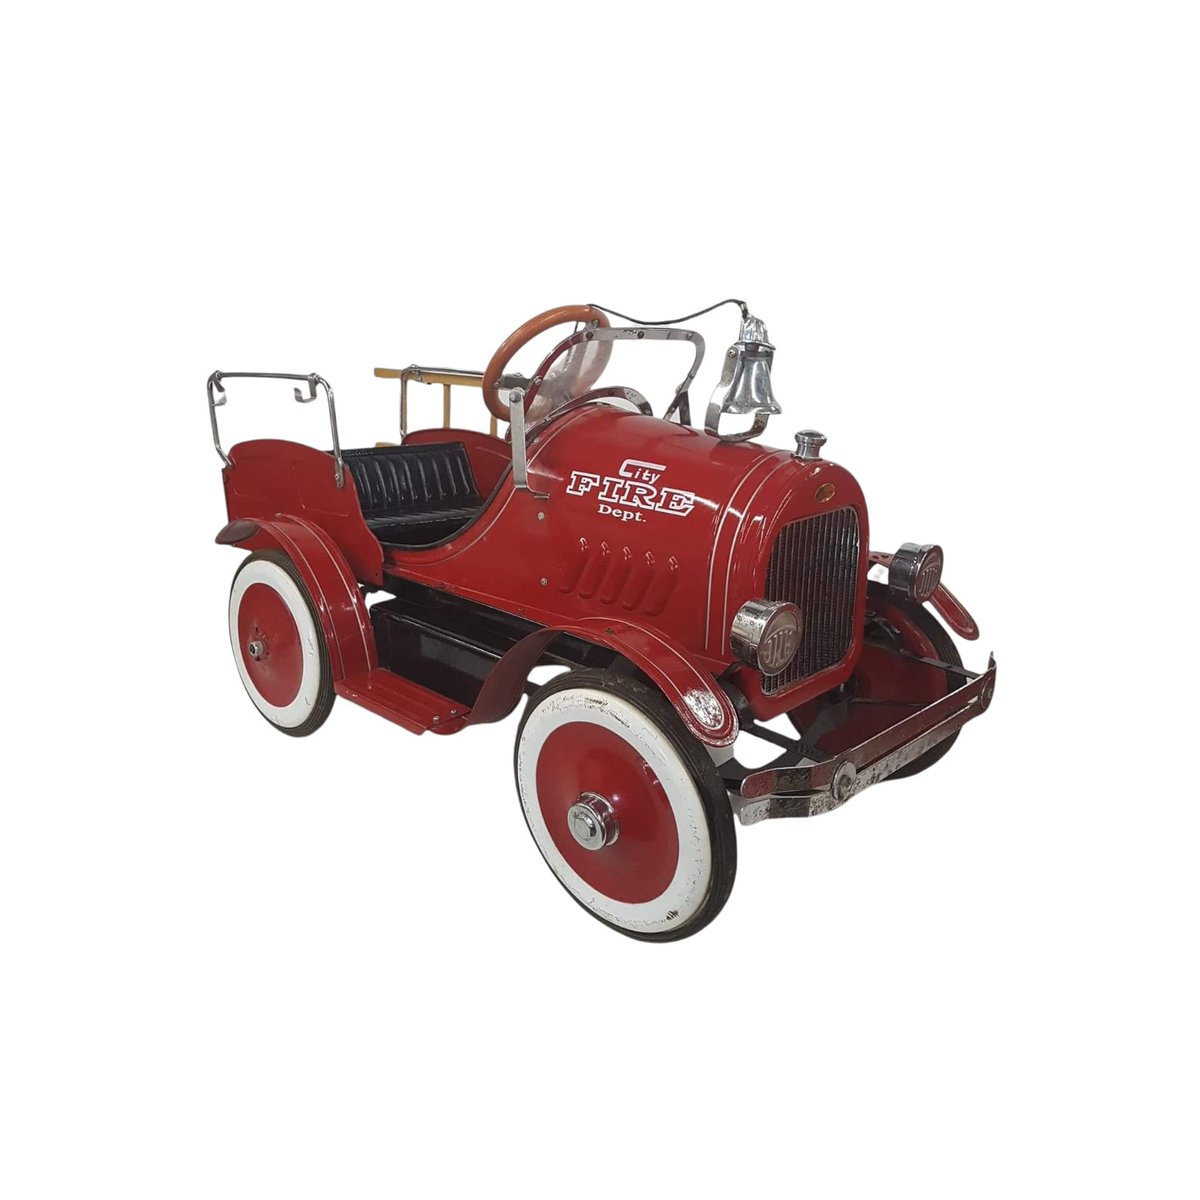 Childs Tin Toy Fire Truck Pedal Car tuppu.net/602ebb18 #Etsy #ChickenDaddy #Automobilia